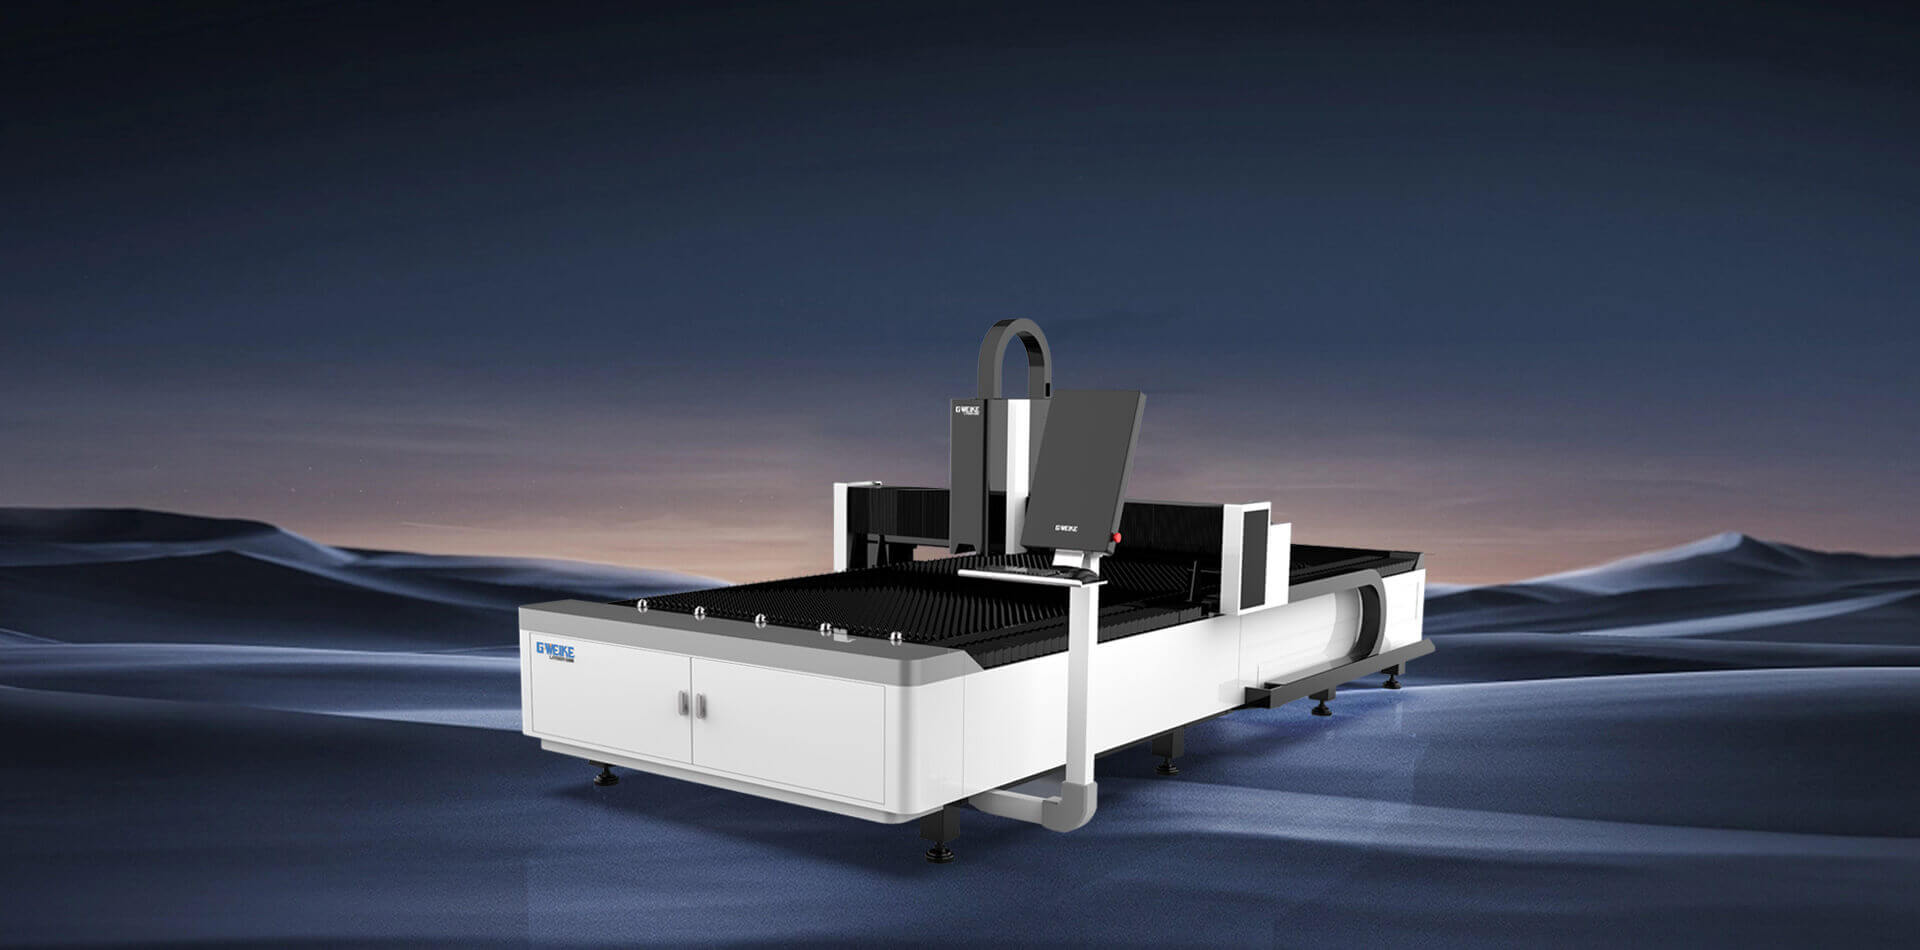 Economy-oriented Laser Cutting Machine E Series 